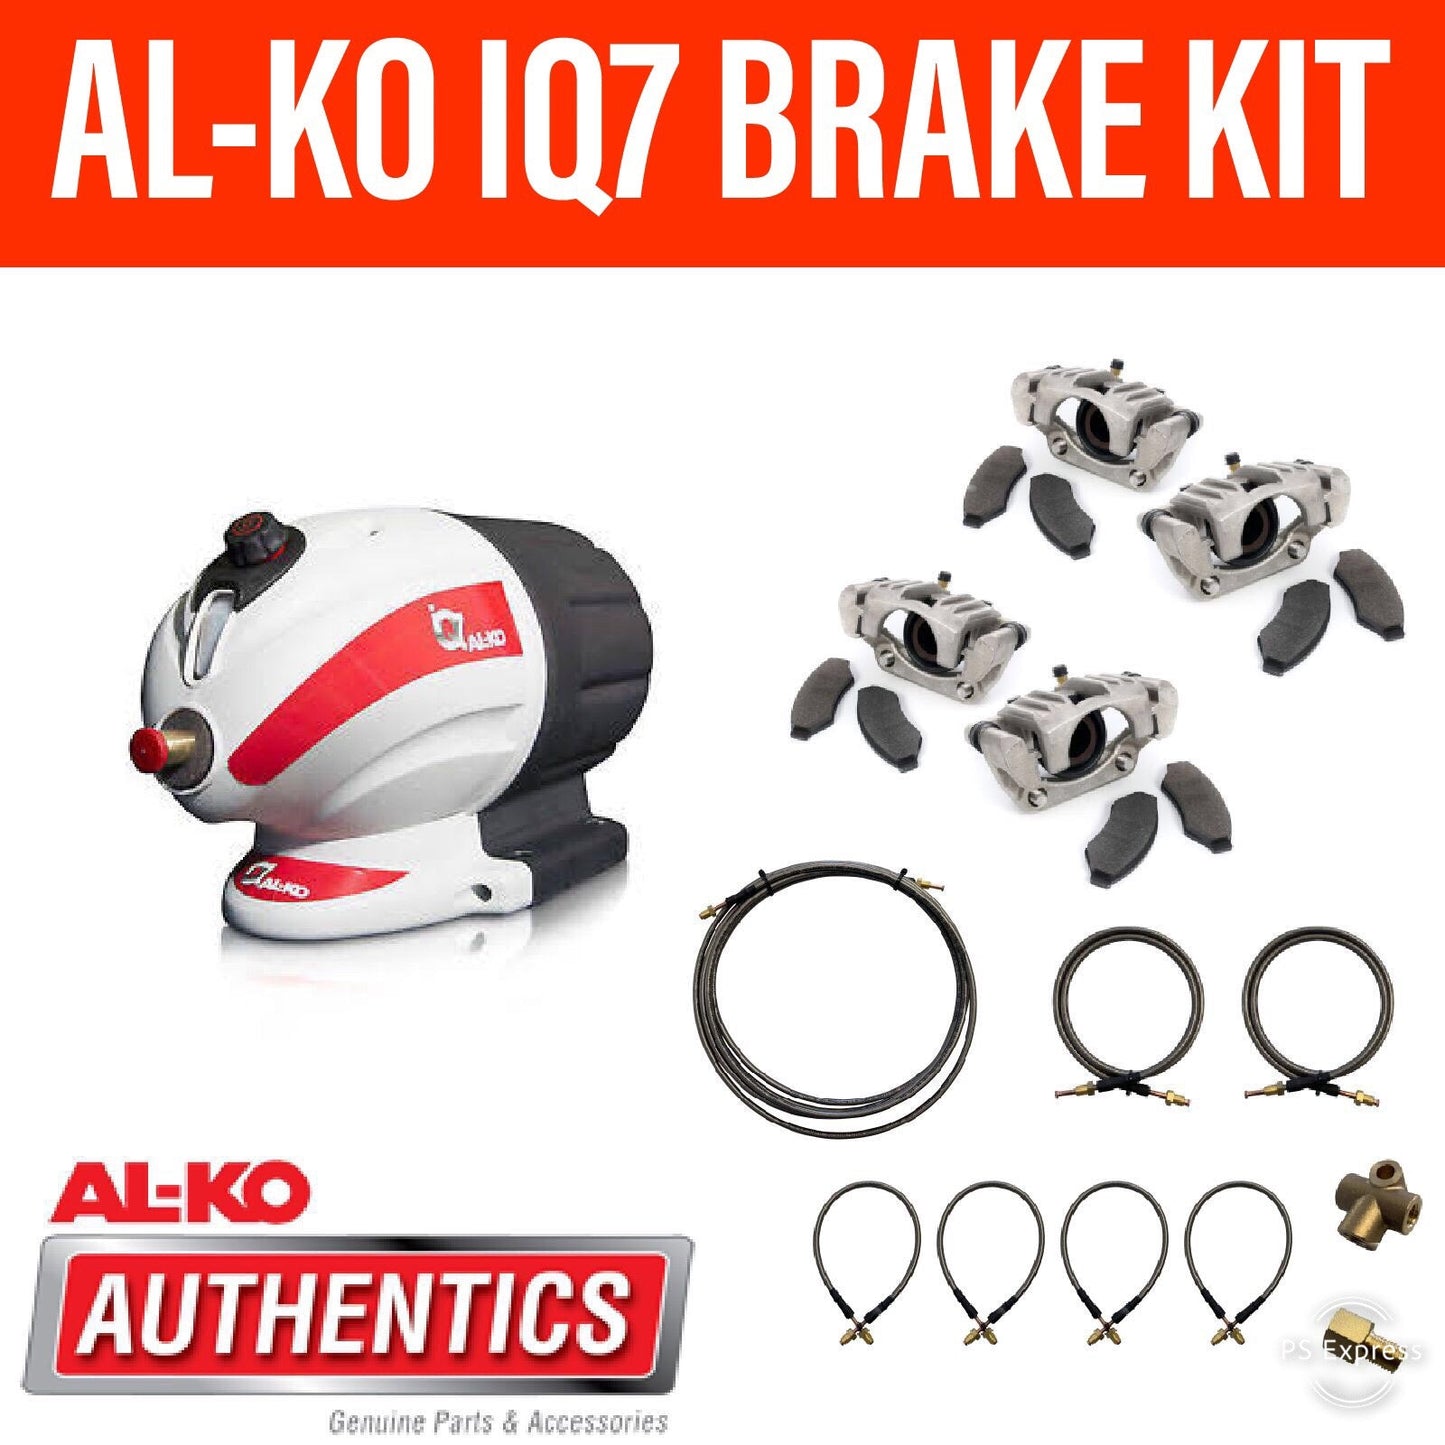 AL-KO IQ7 BRAKE KIT With Calipers and S/S Brake Lines